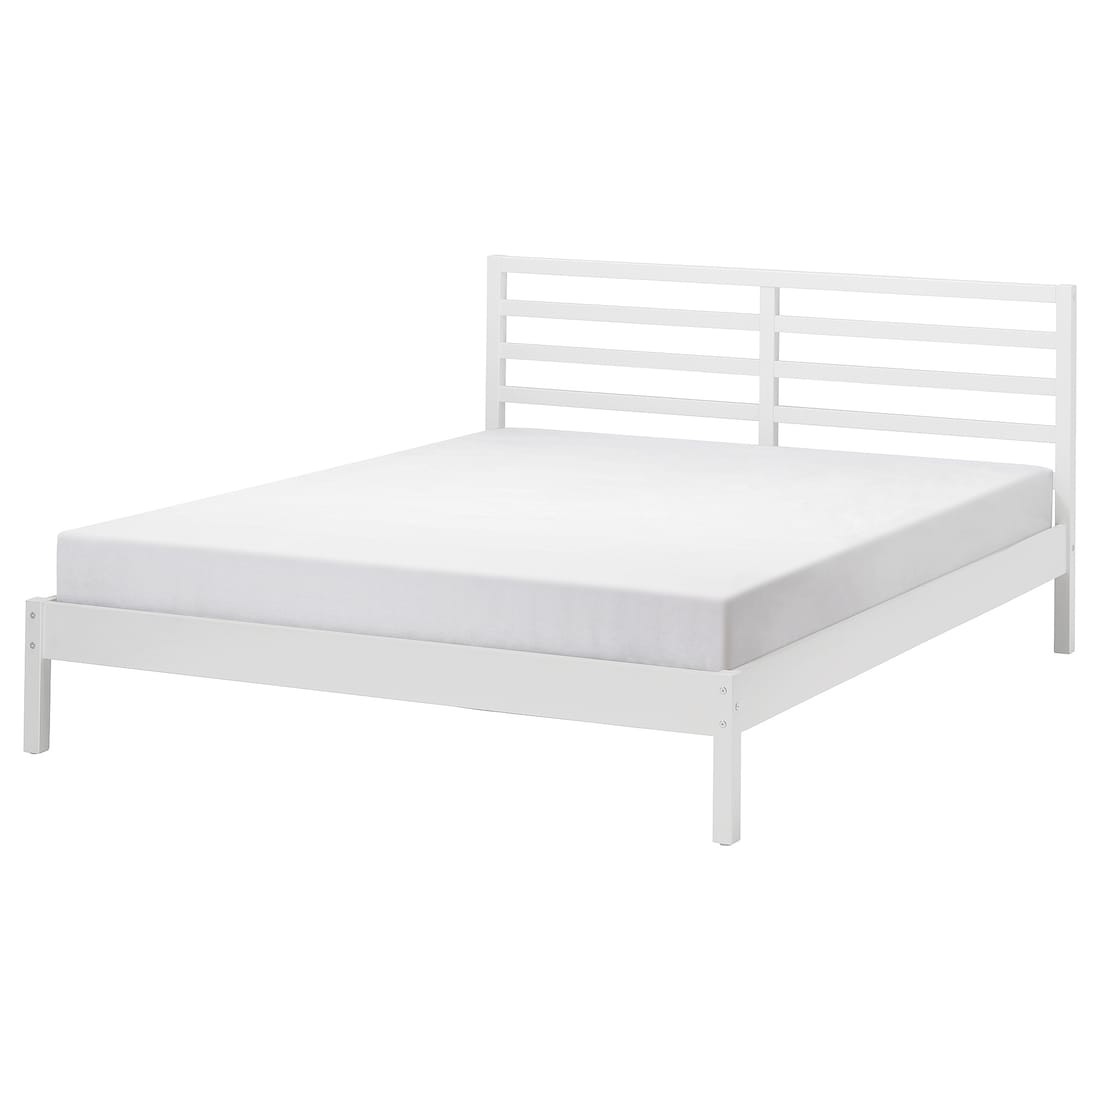 IKEA TARVA каркас кровати, белая морилка, 160x200 см 09553973 095.539.73